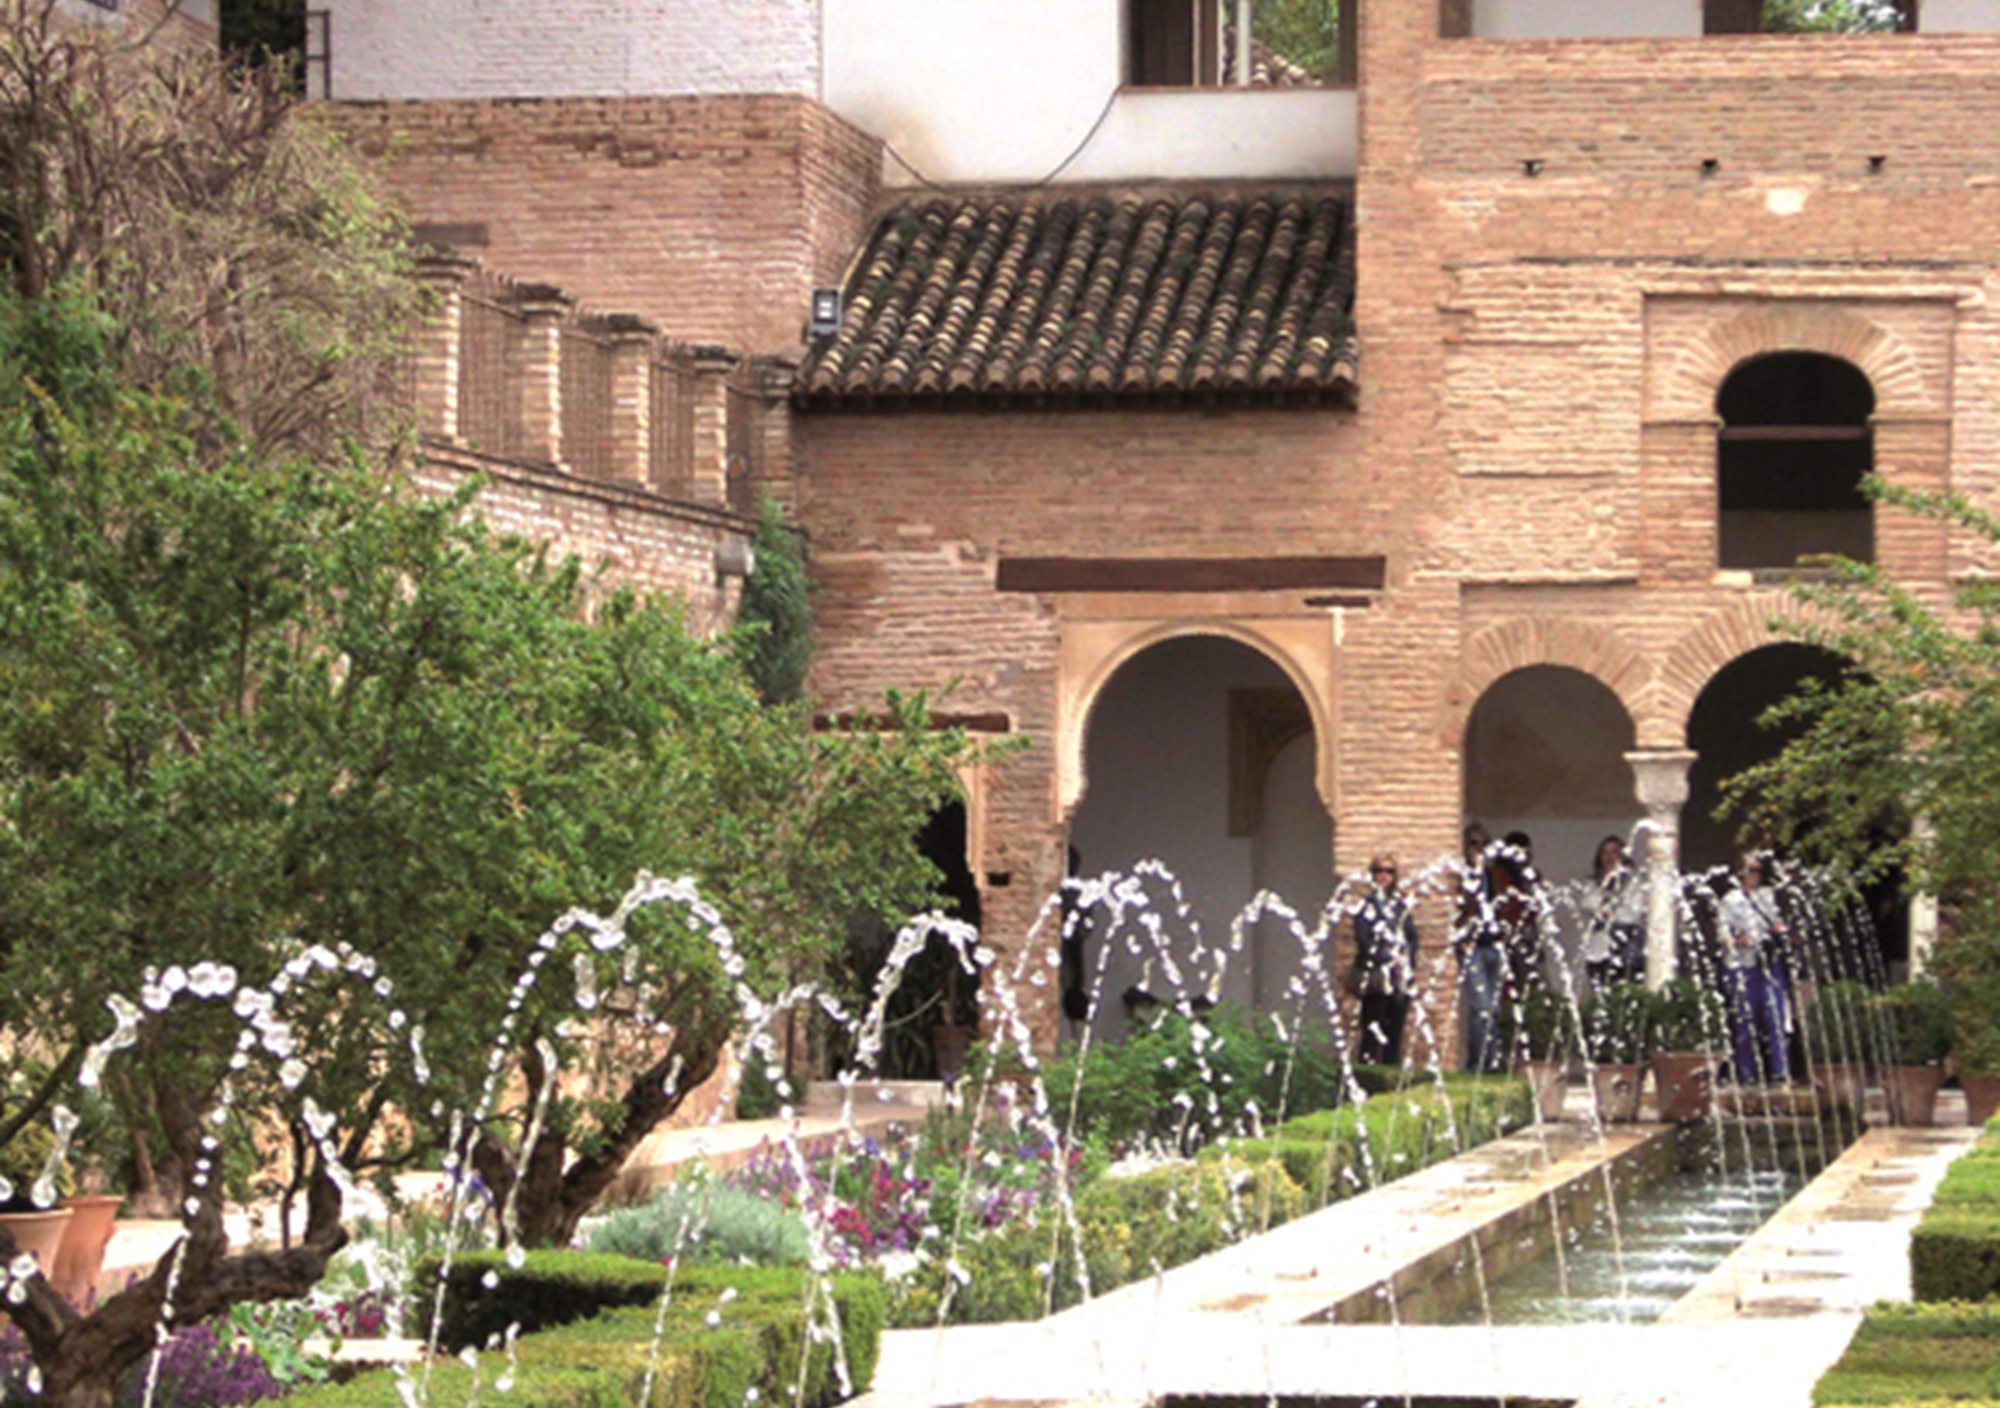 visita guiada a la Alhambra de Granada